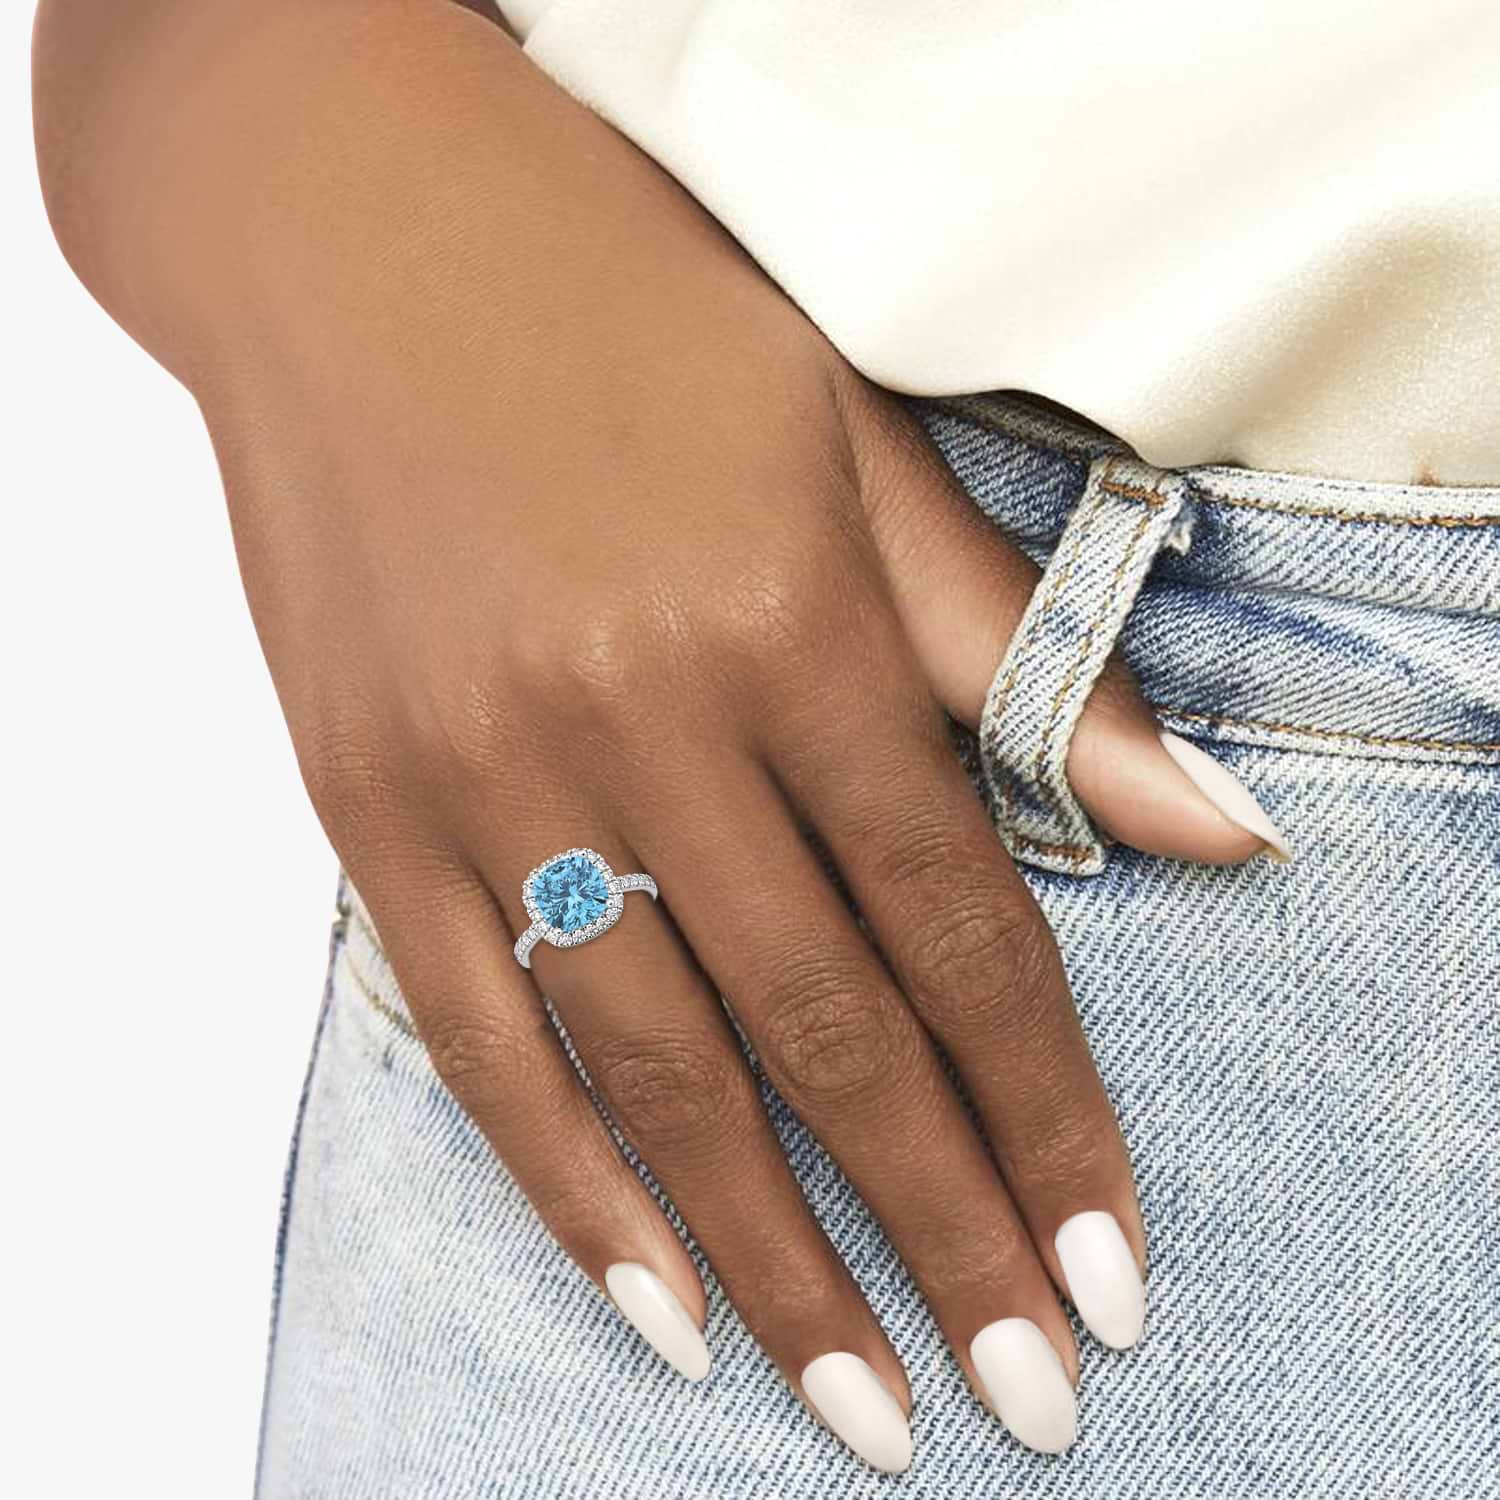 Cushion Cut Halo Blue Topaz & Diamond Engagement Ring 14k White Gold (3.11ct)